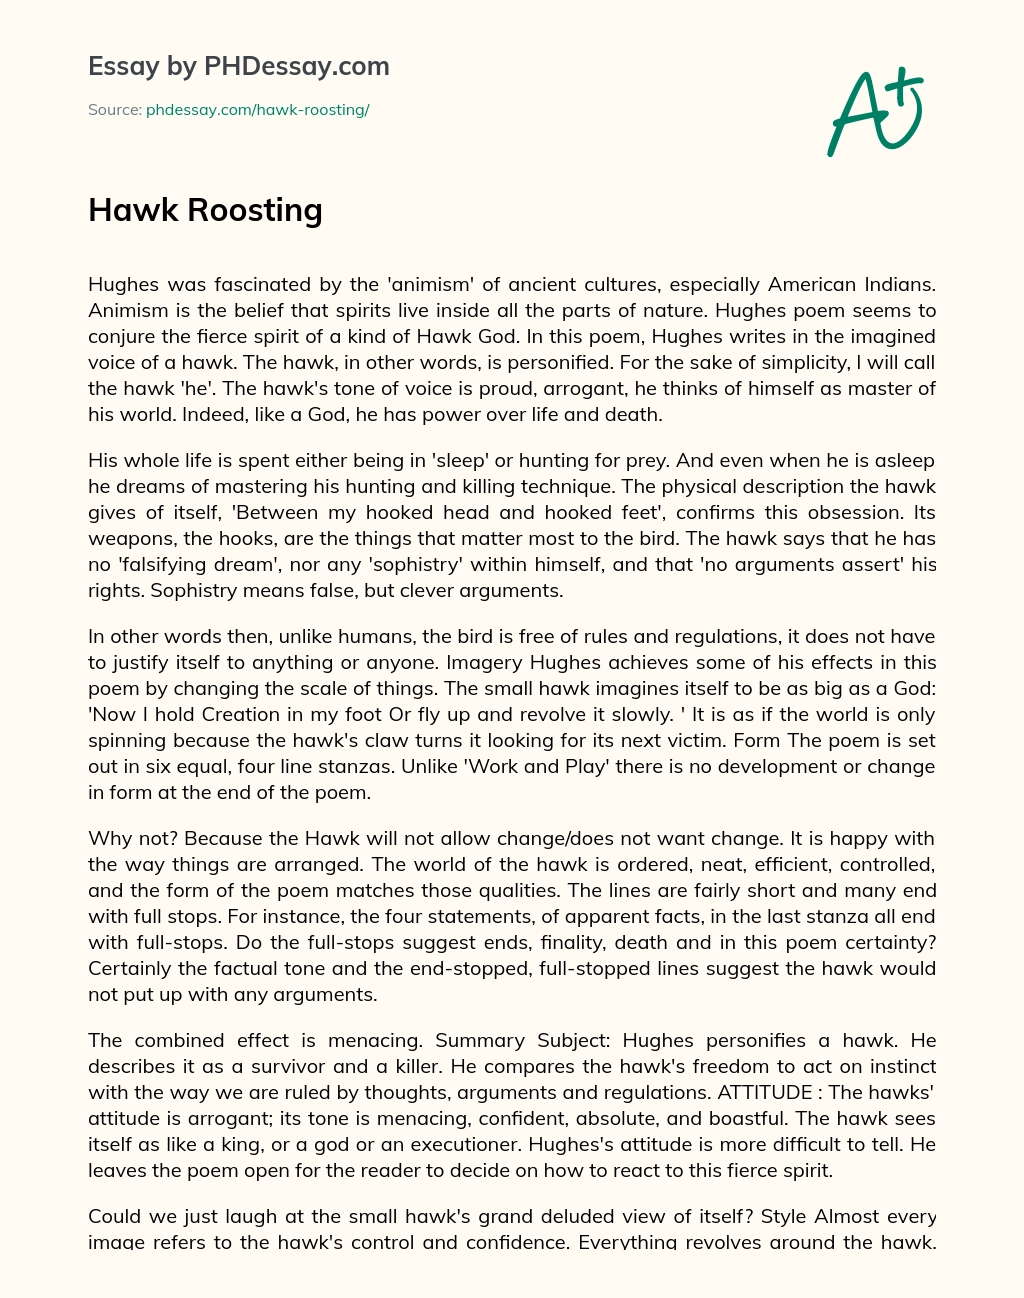 Hawk Roosting essay